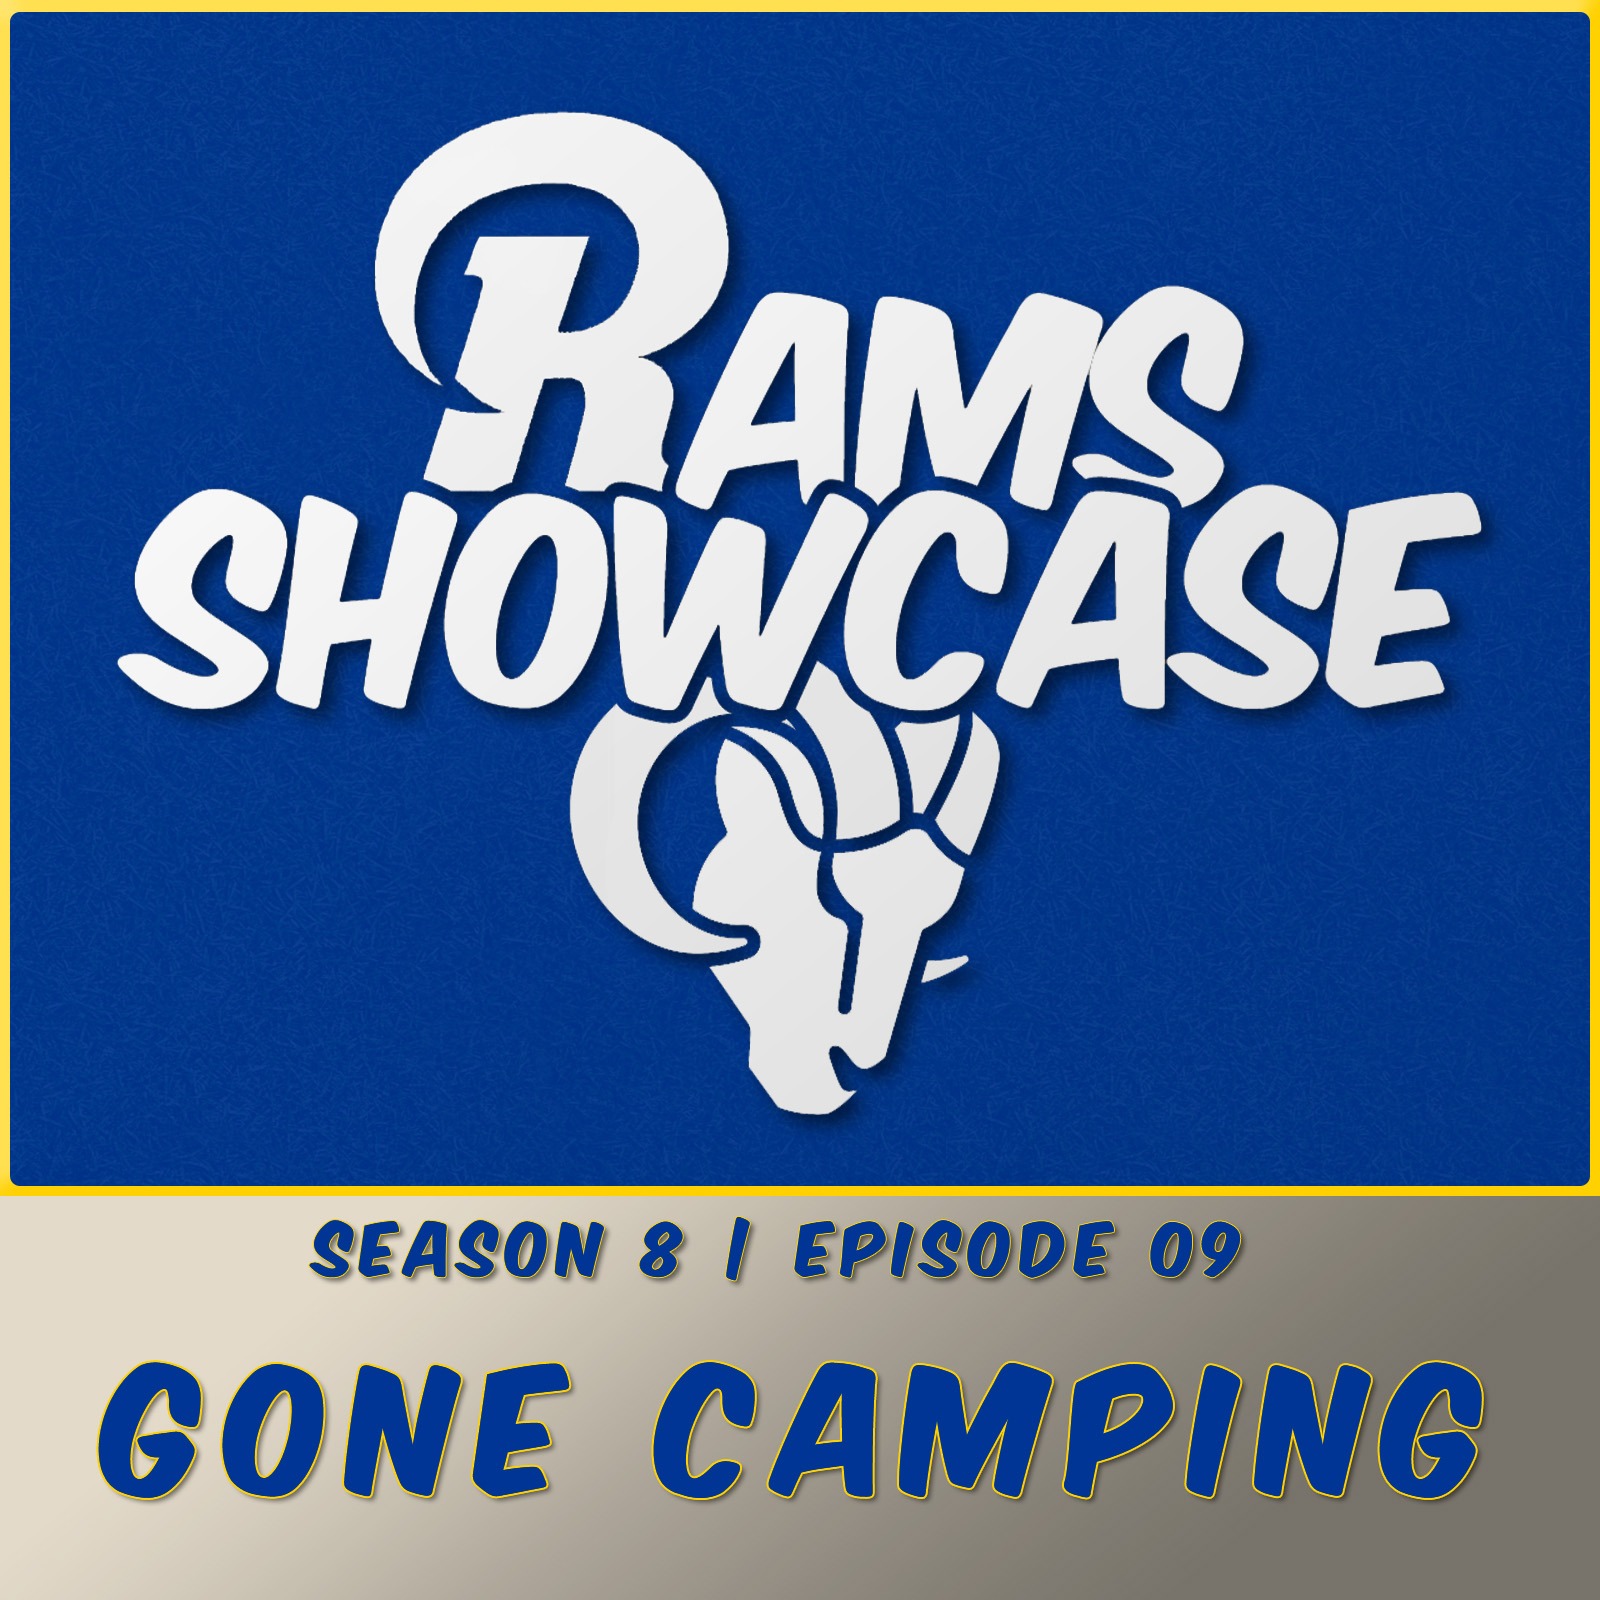 Episode 09 - Gone Camping